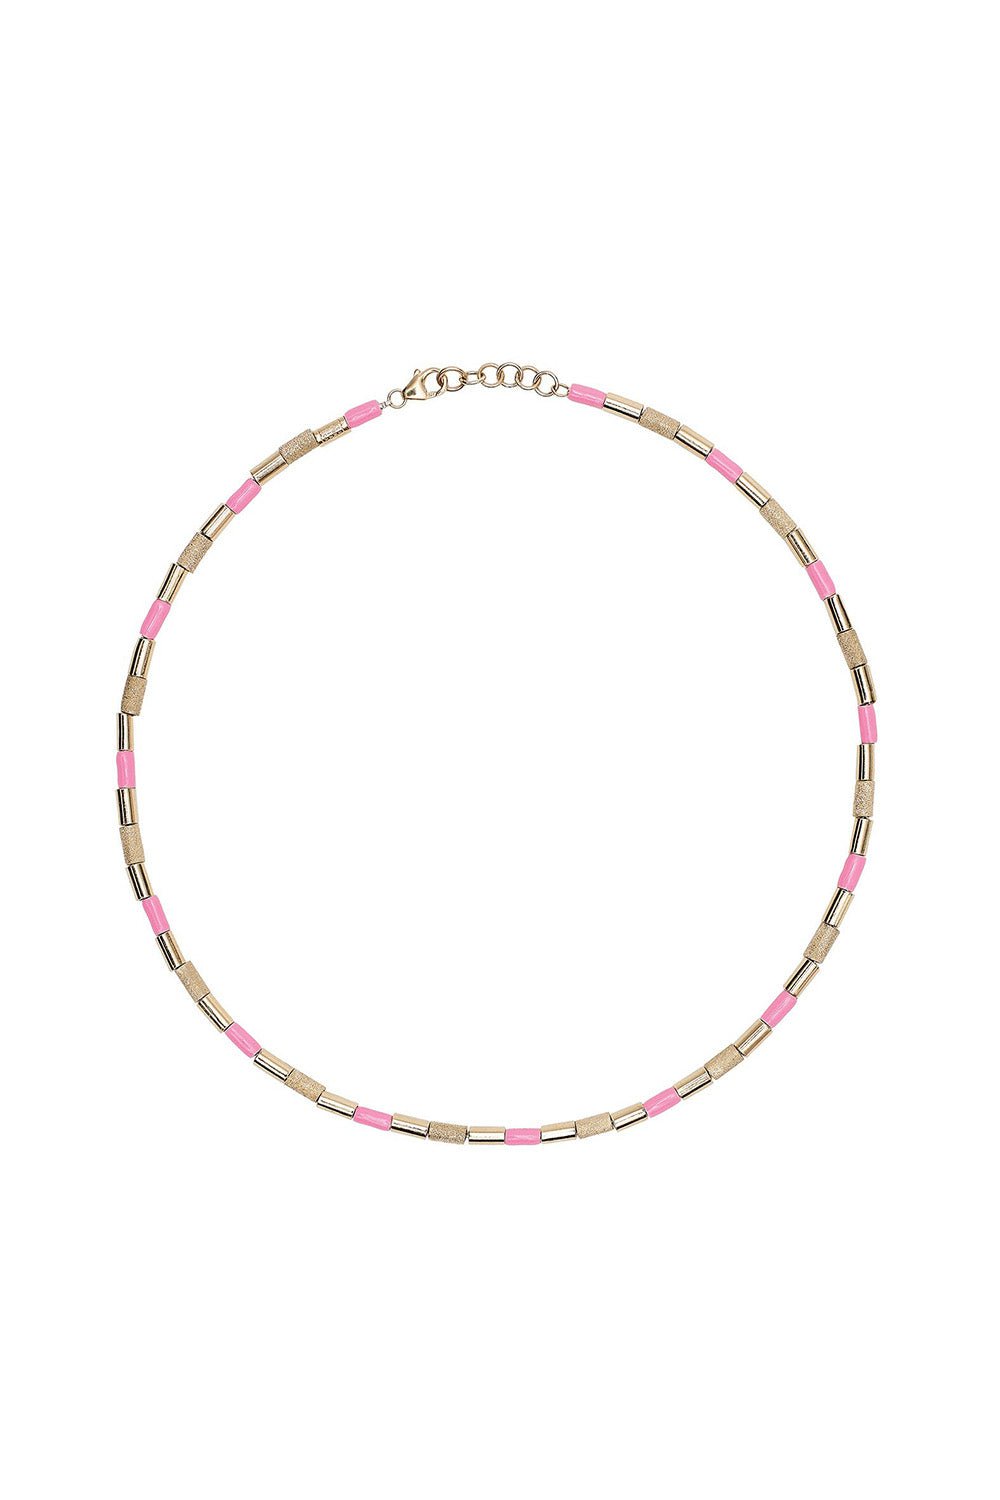 BEA BONGIASCA-Pink Tubini Necklace-YELLOW GOLD